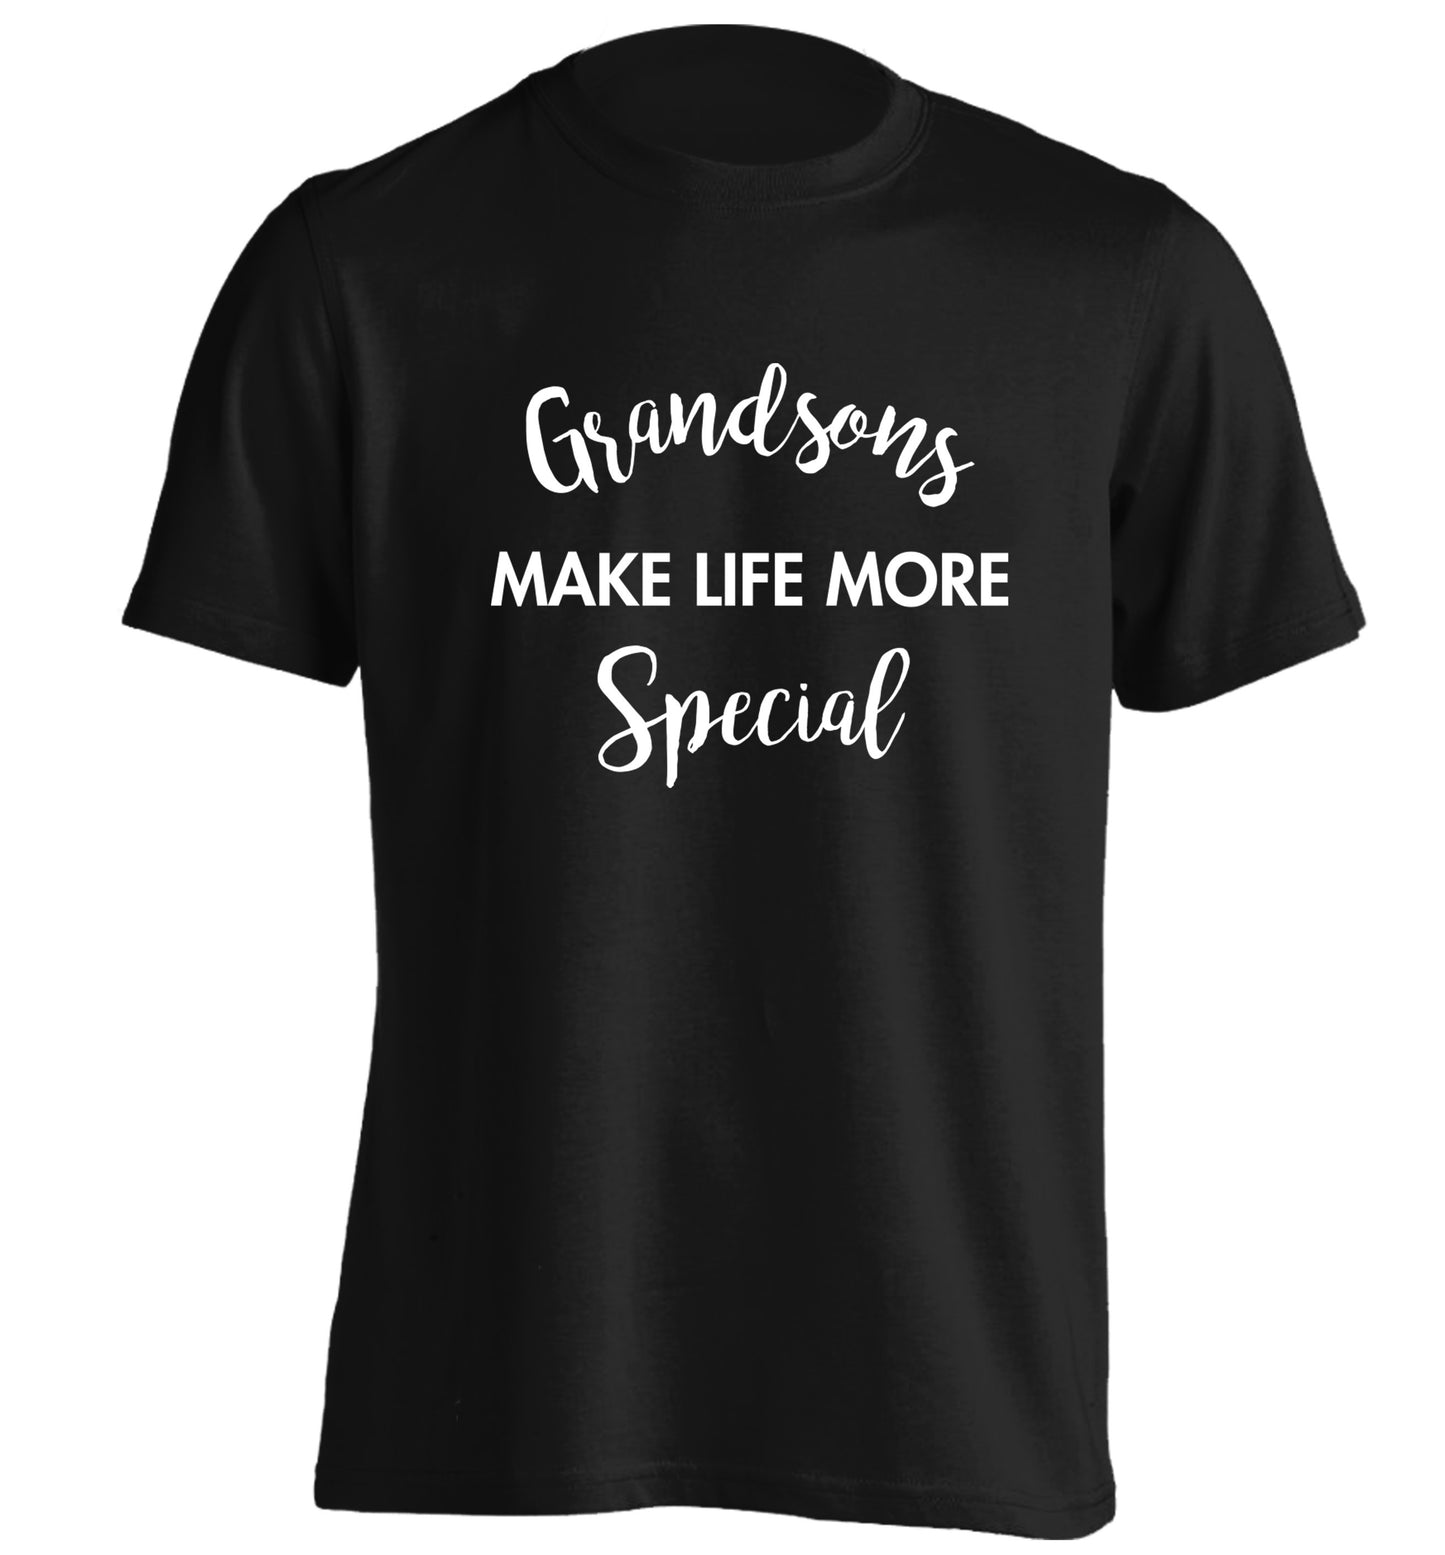 Grandsons make life more special adults unisex black Tshirt 2XL